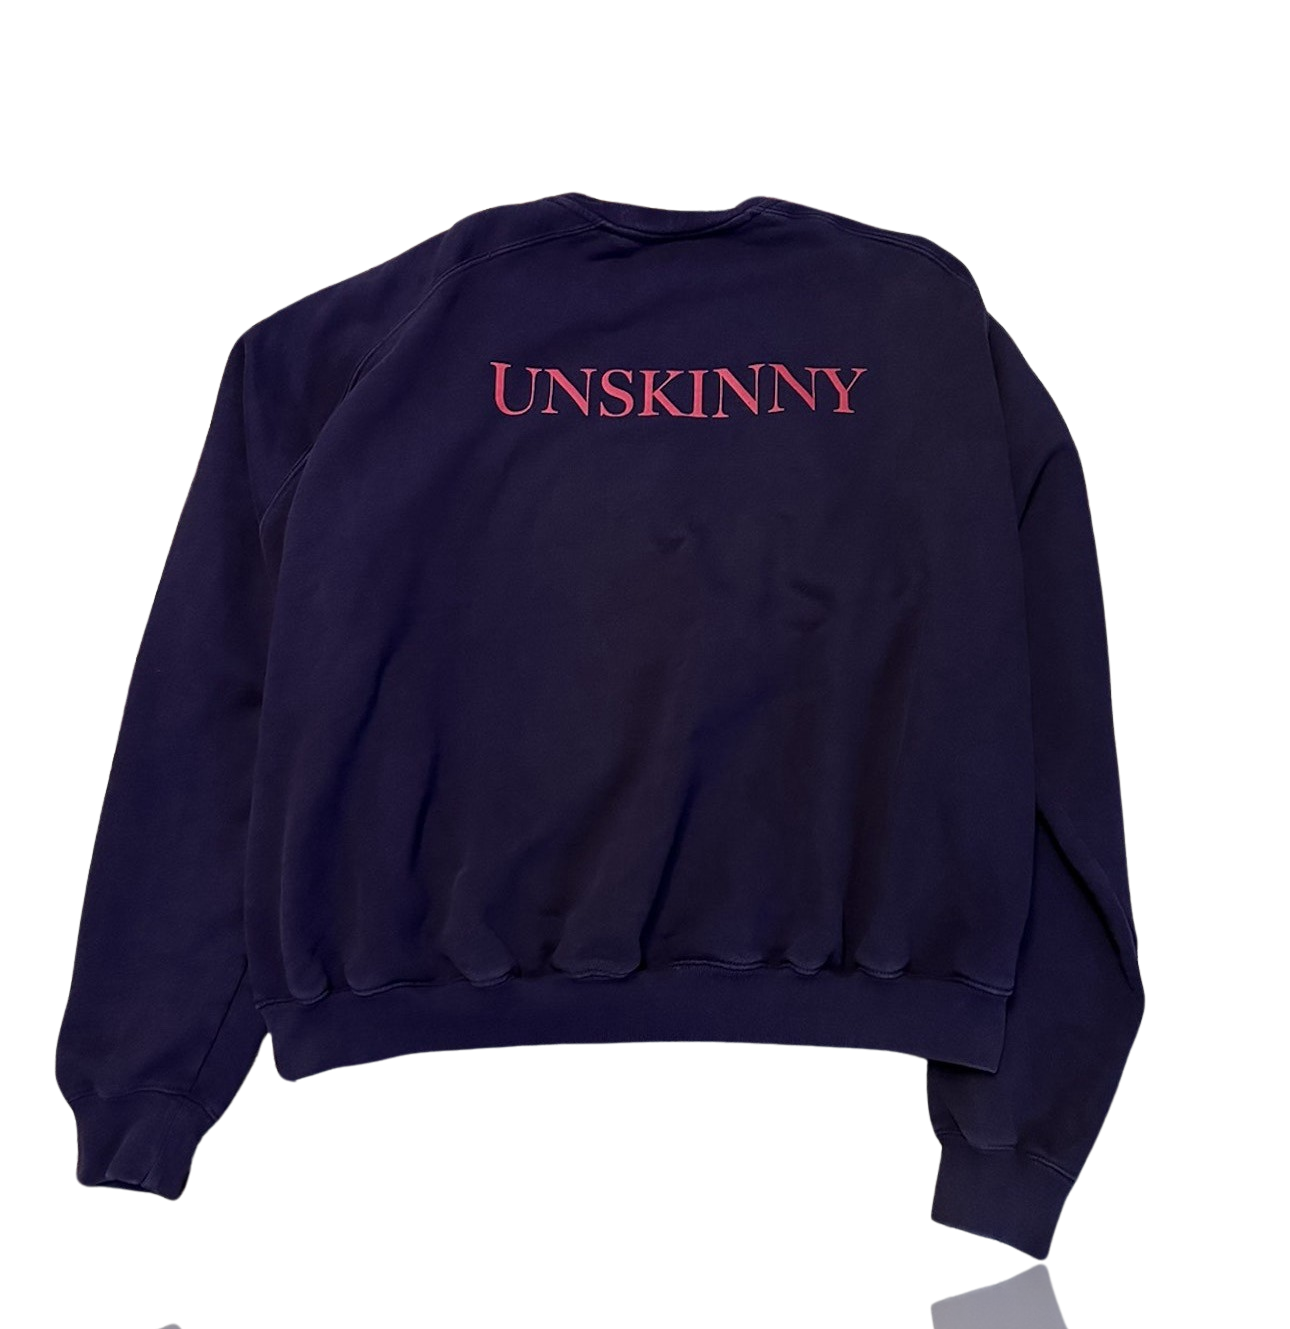 Vetements Unskinny Sweater - Swishy Archive